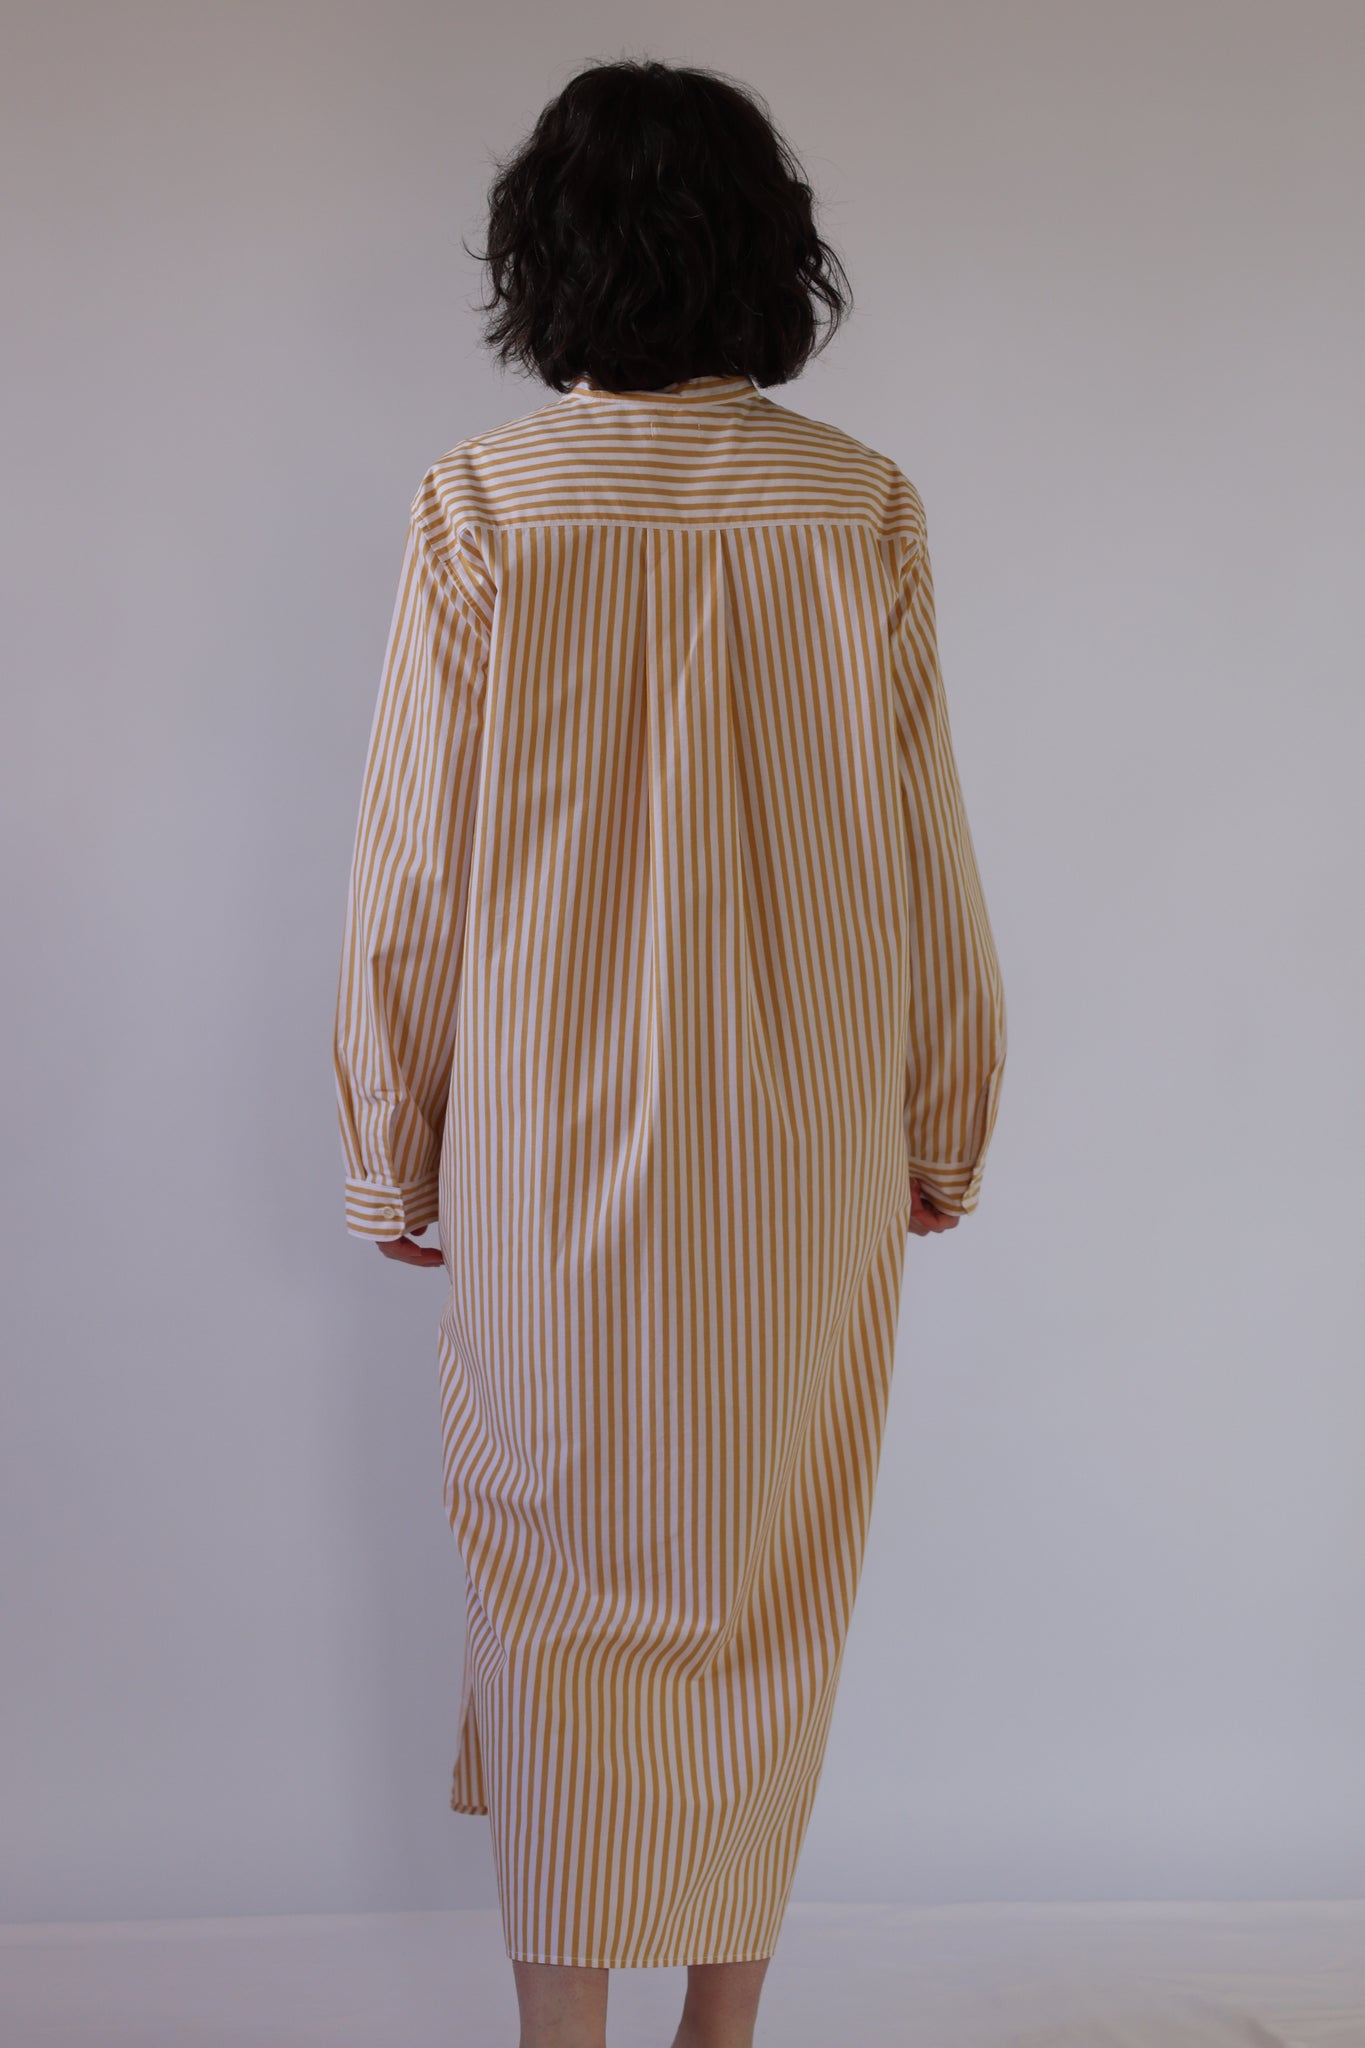 Crista Long Shirt / Organic Cotton Poplin / Striped White/Natural